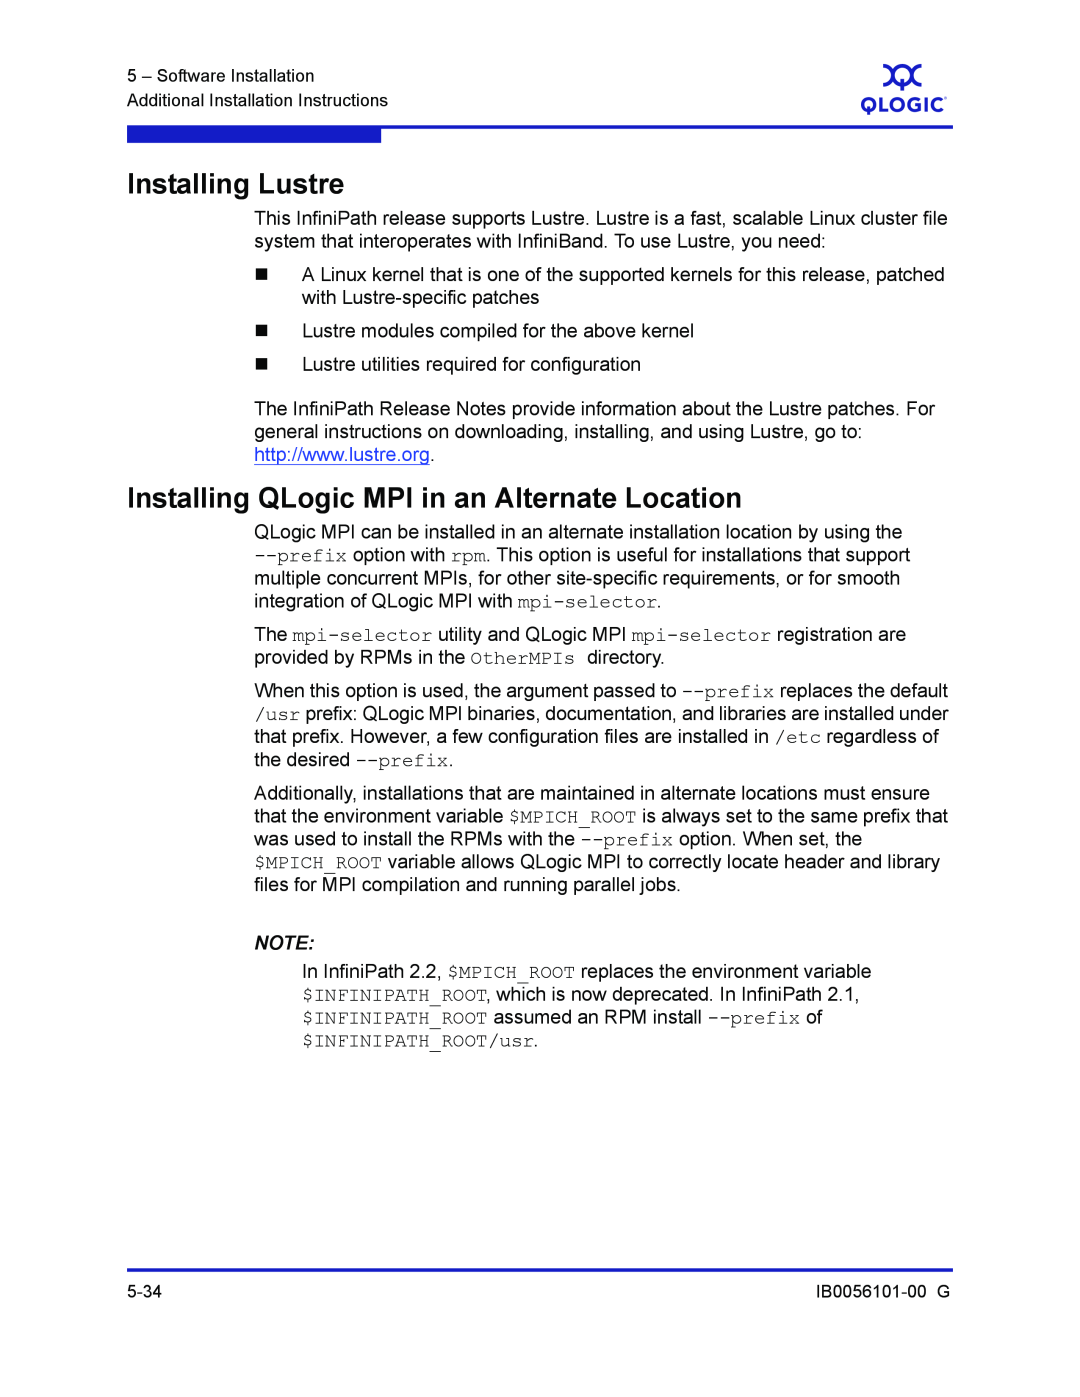 Q-Logic IB0056101-00 G manual Installing Lustre, Installing QLogic MPI in an Alternate Location 